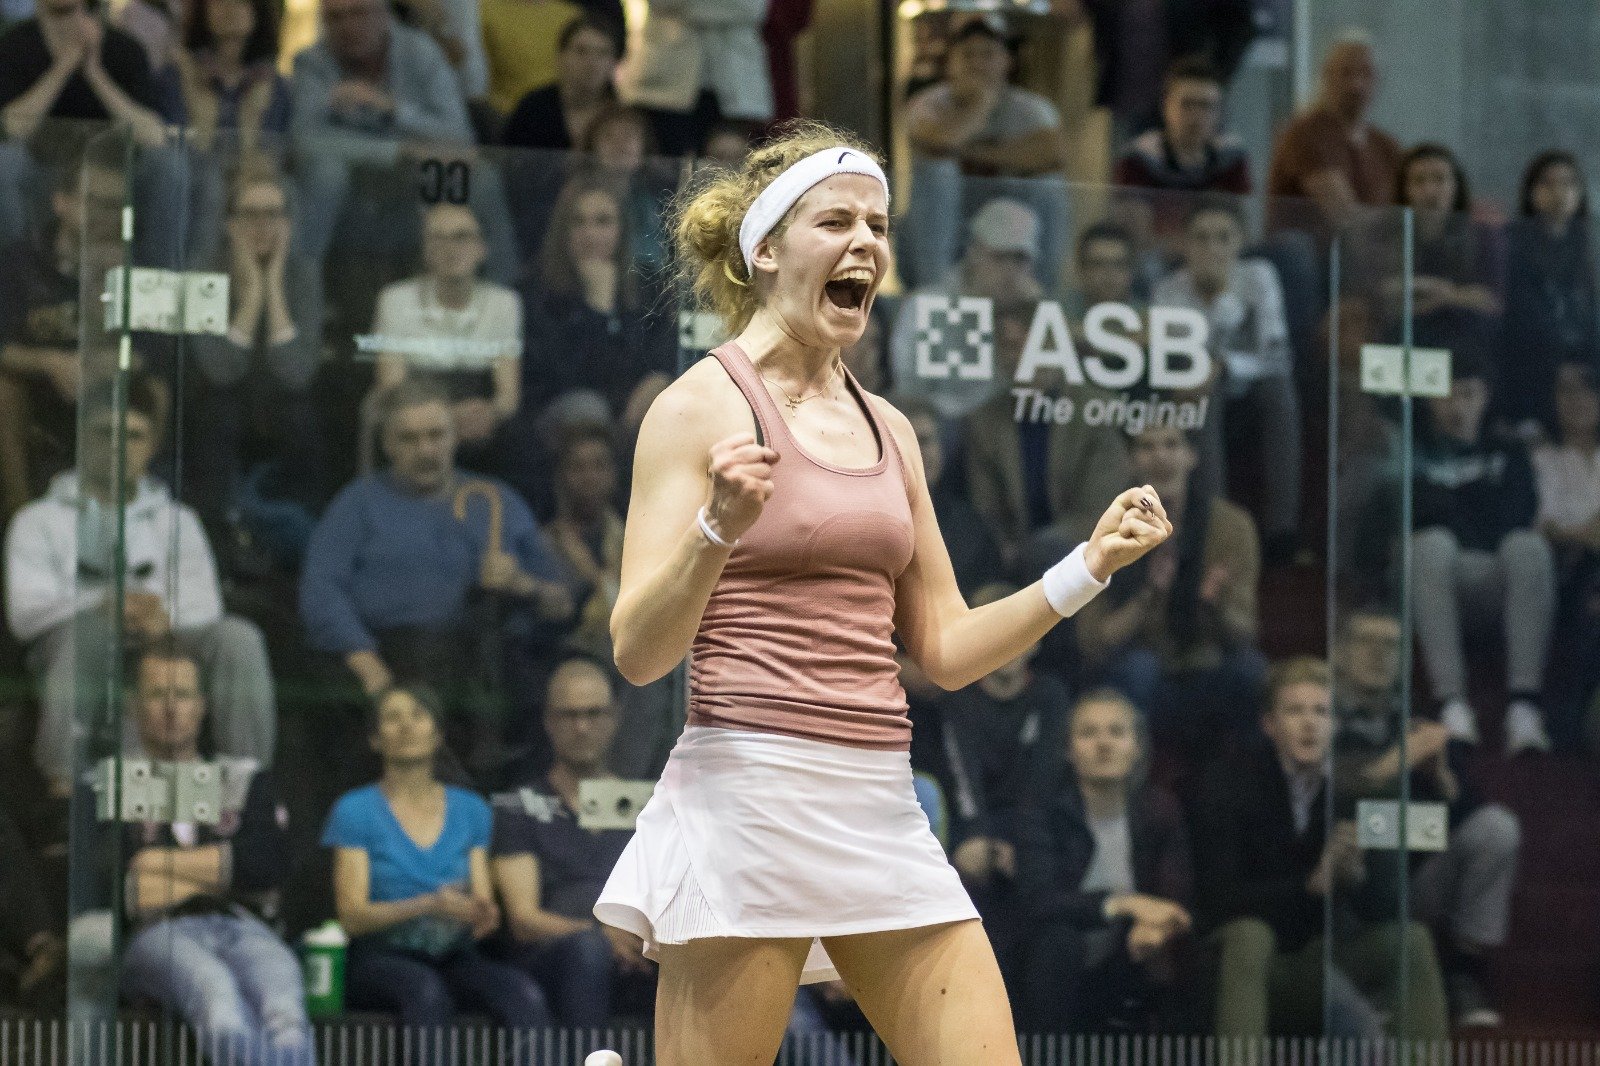 Celebrating win on the squash court